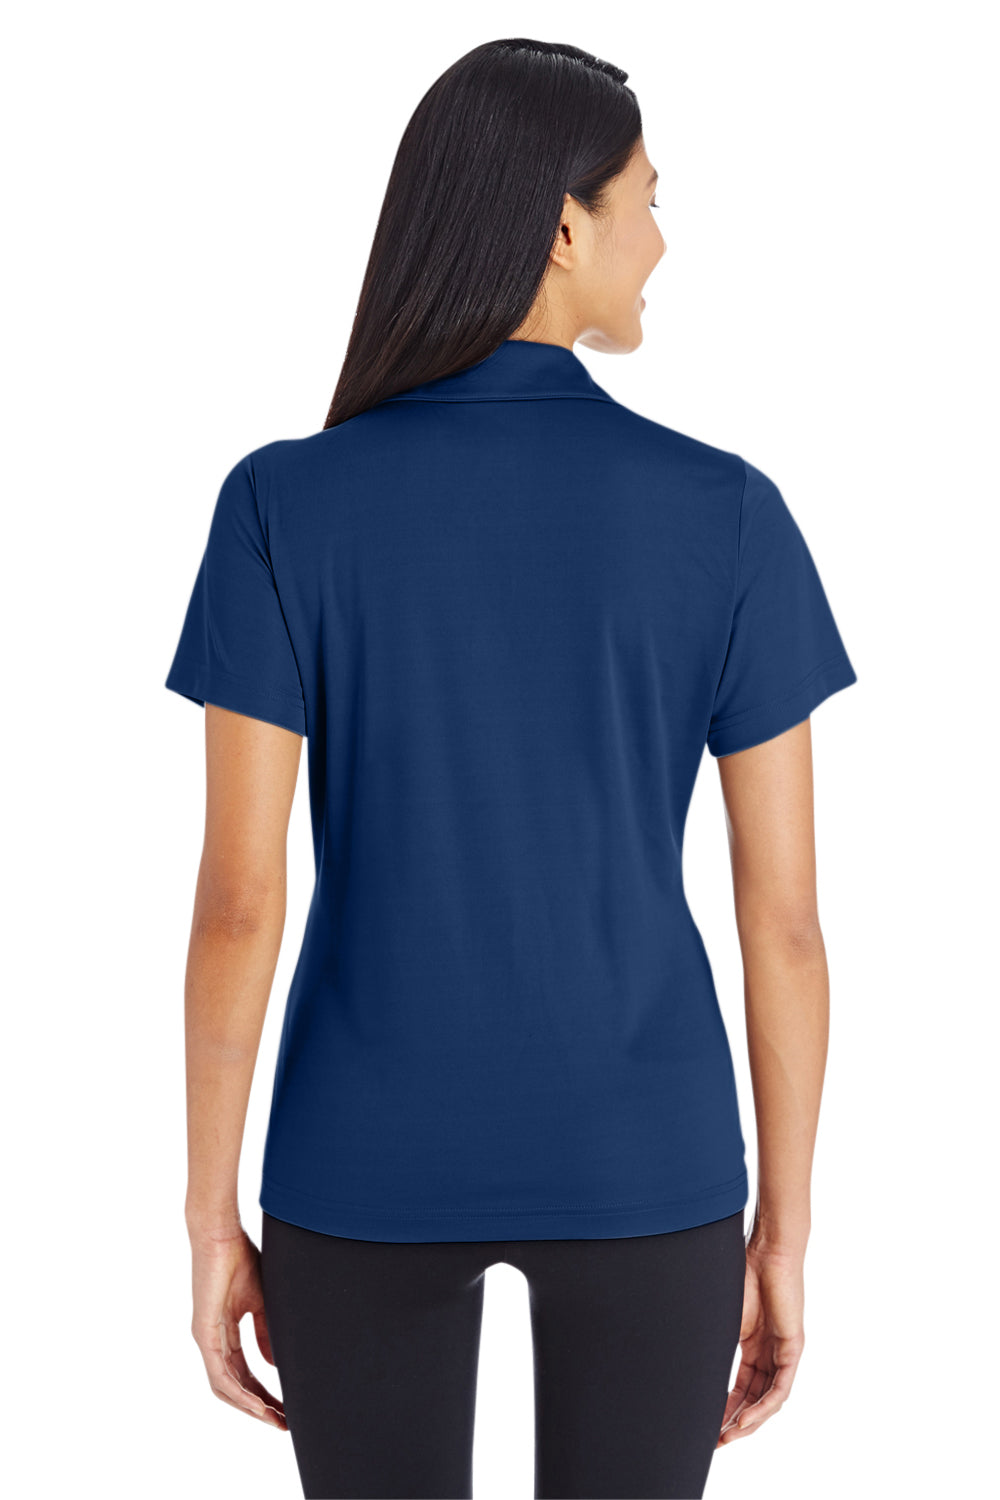 Team 365 TT51W Womens Zone Performance Moisture Wicking Short Sleeve Polo Shirt Navy Blue Back